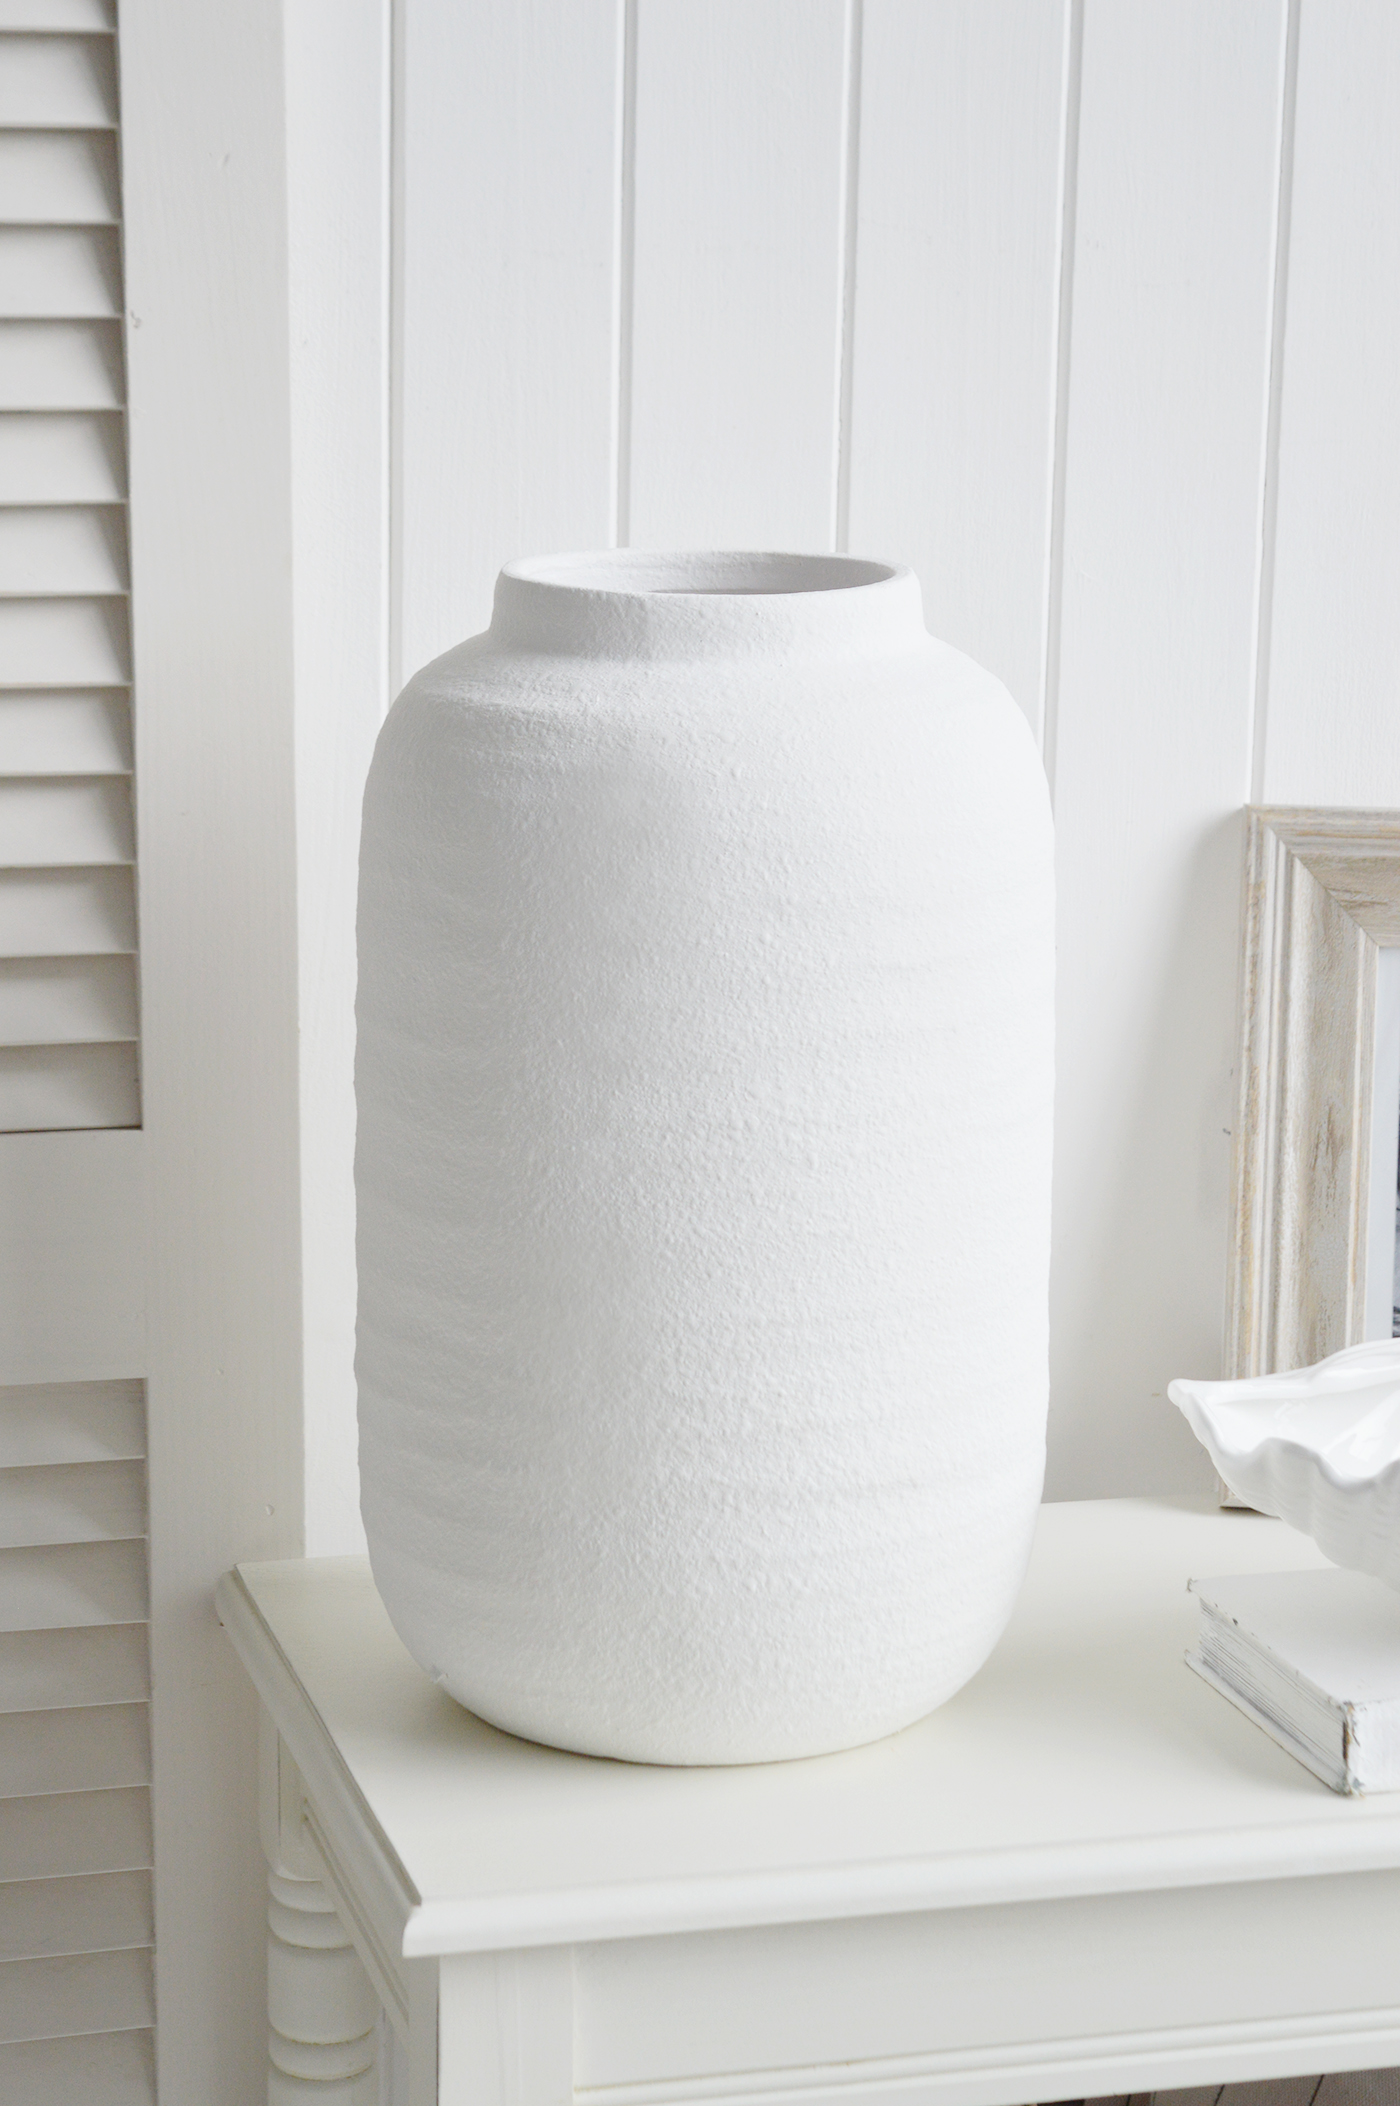 A white textured ceramic large vase